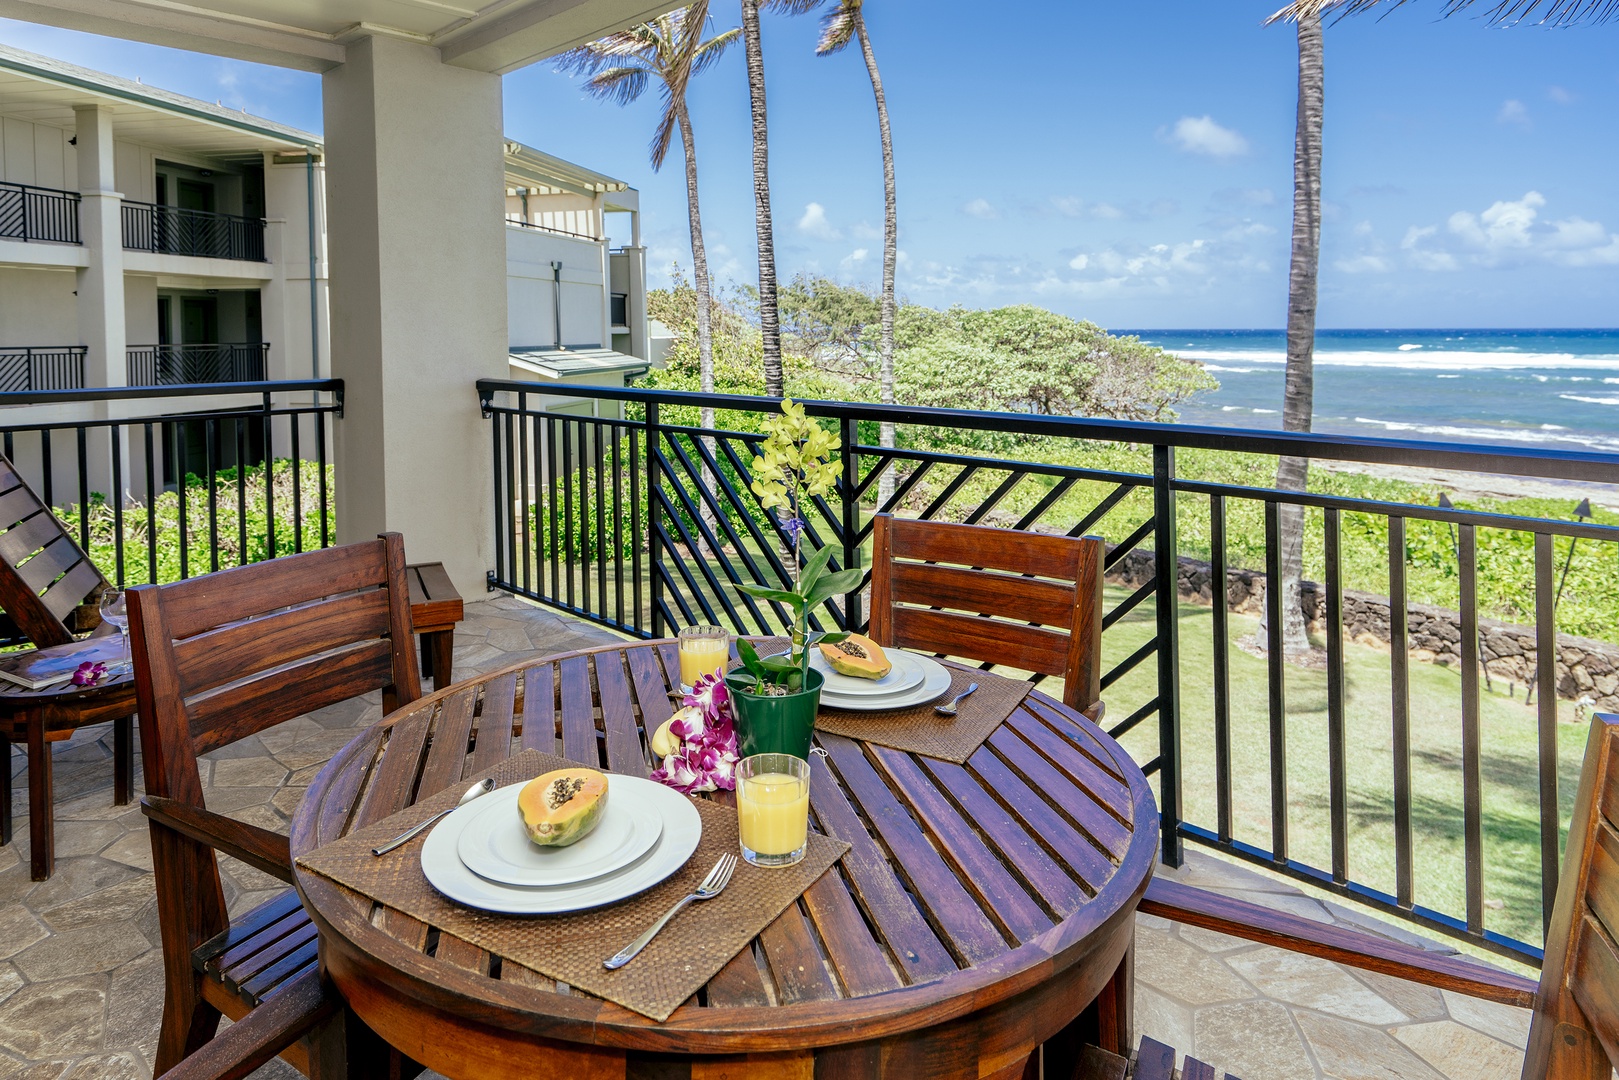 Kahuku Vacation Rentals, OFB Turtle Bay Villas 216 - Enjoy ocean-front dining right on your lanai.